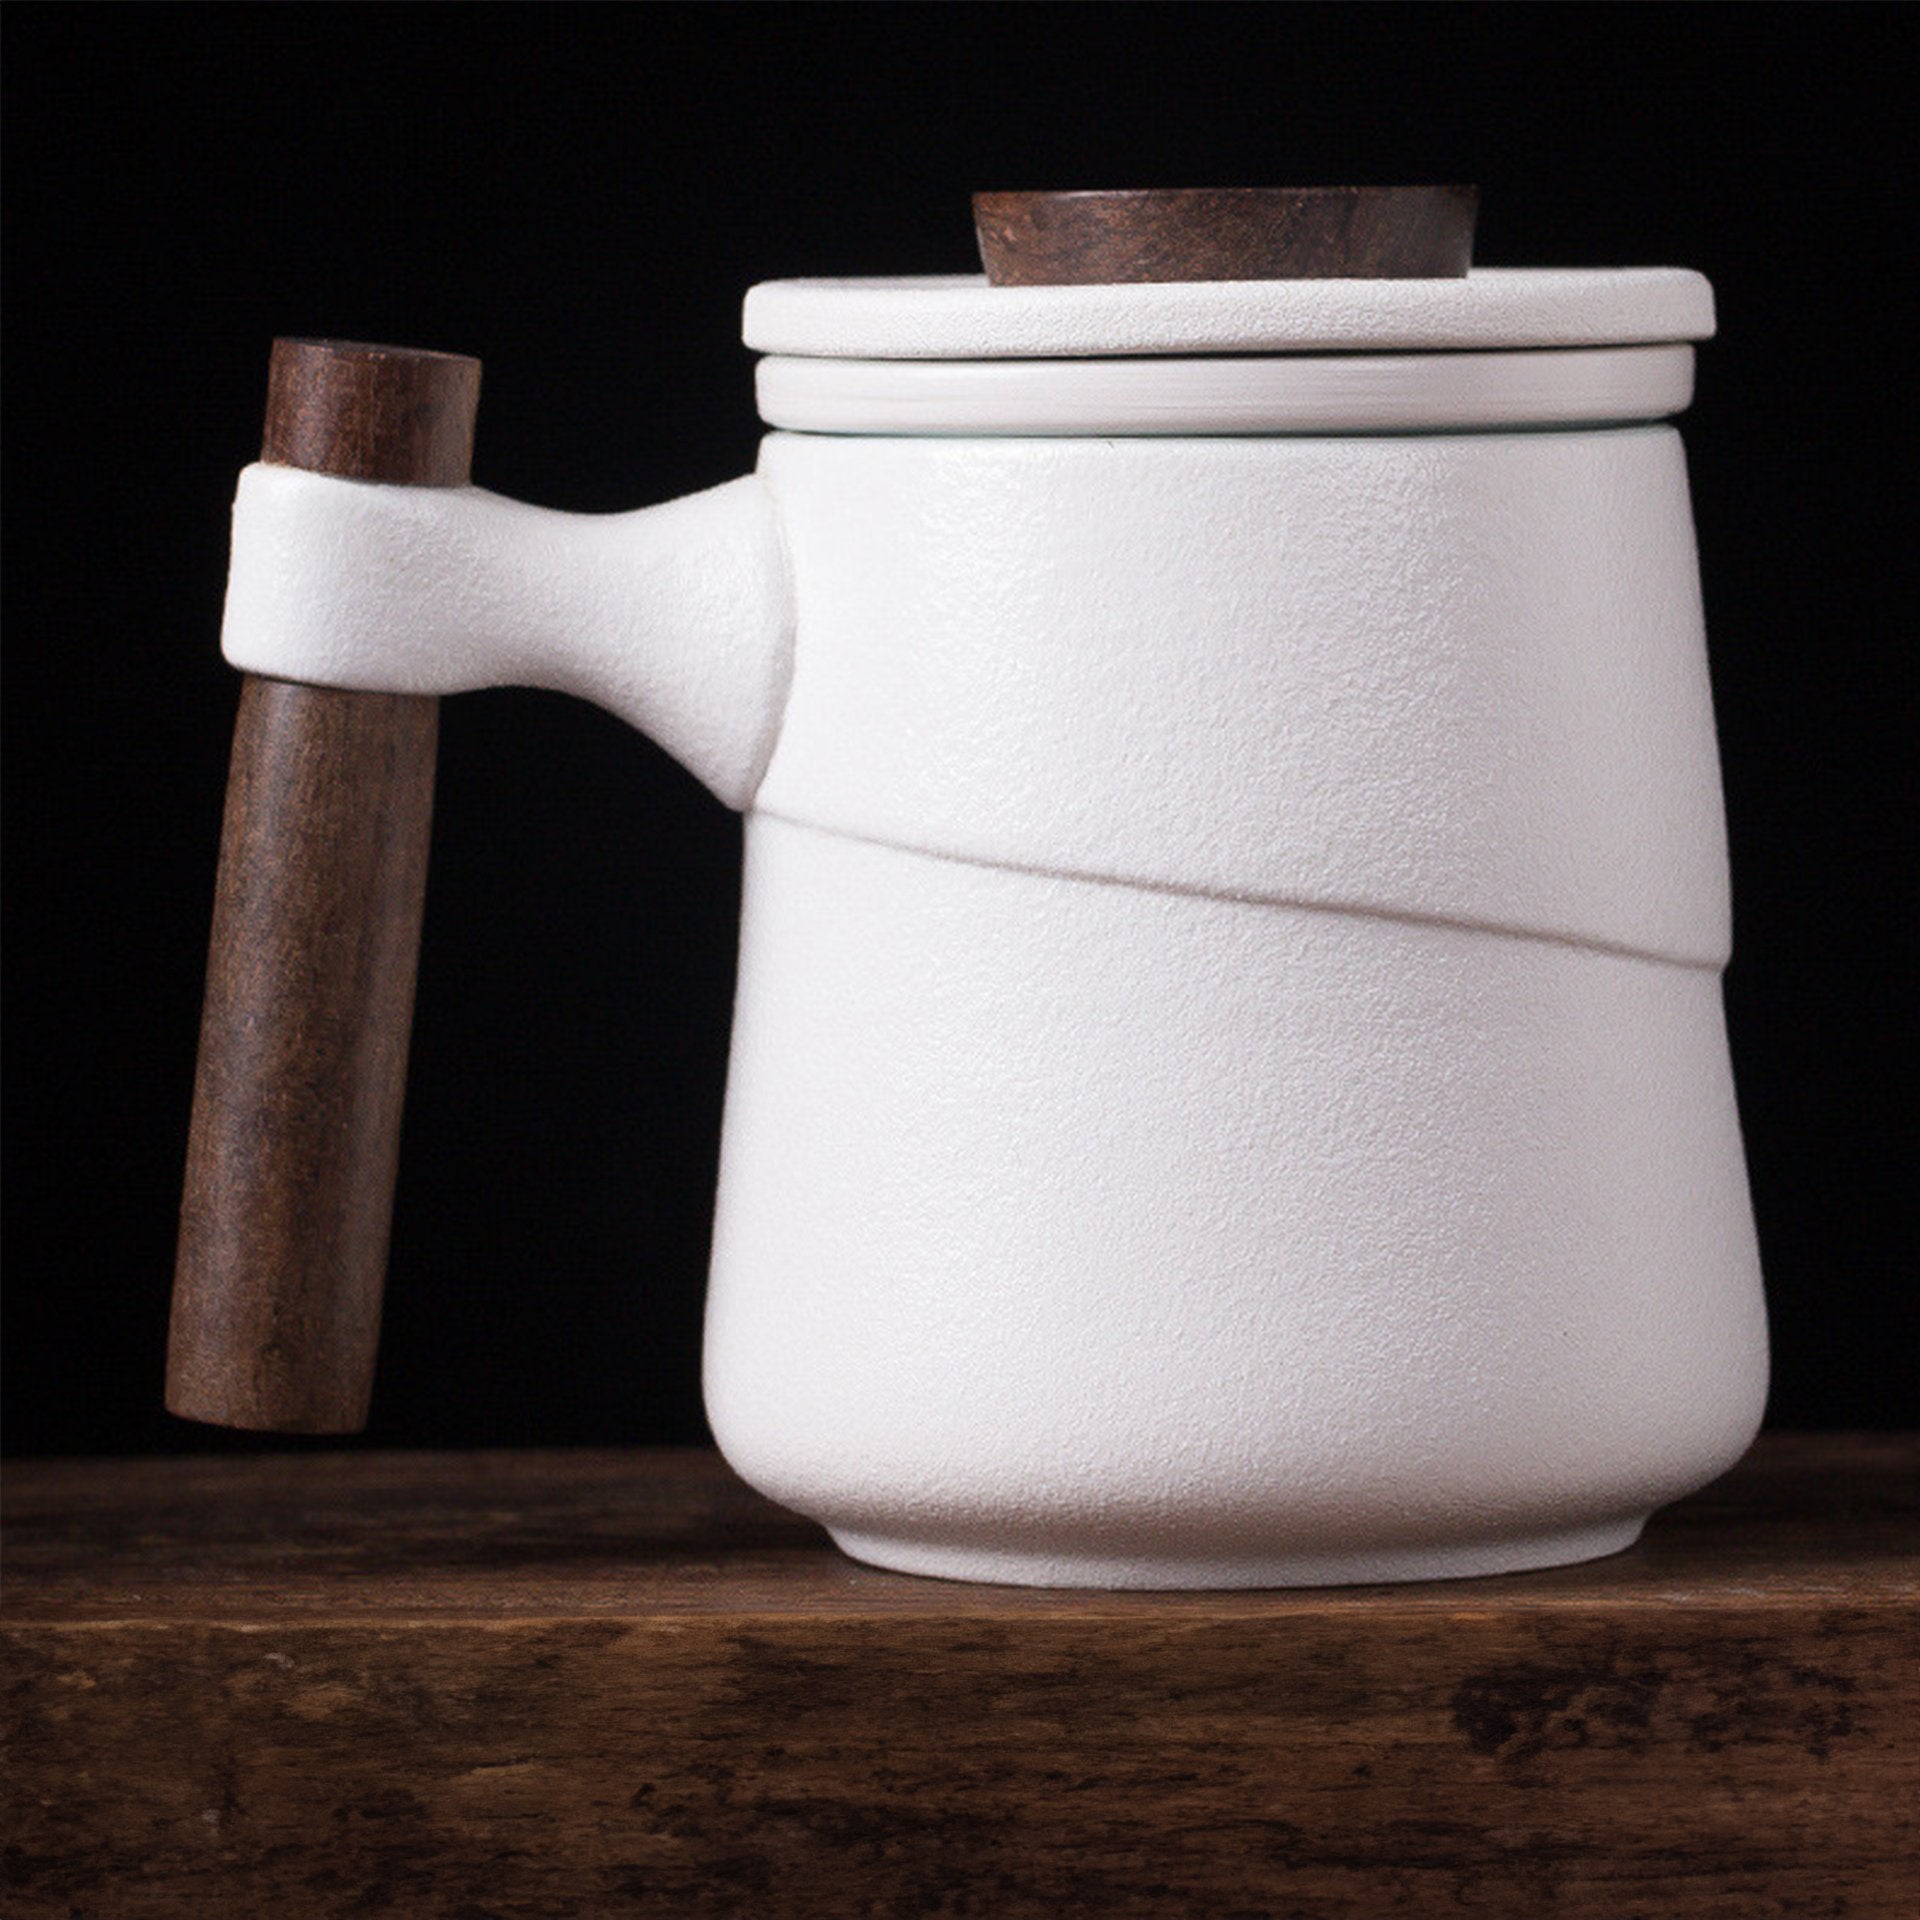 Ceramic Tea Filter Mug With Wooden Handle - 350ml